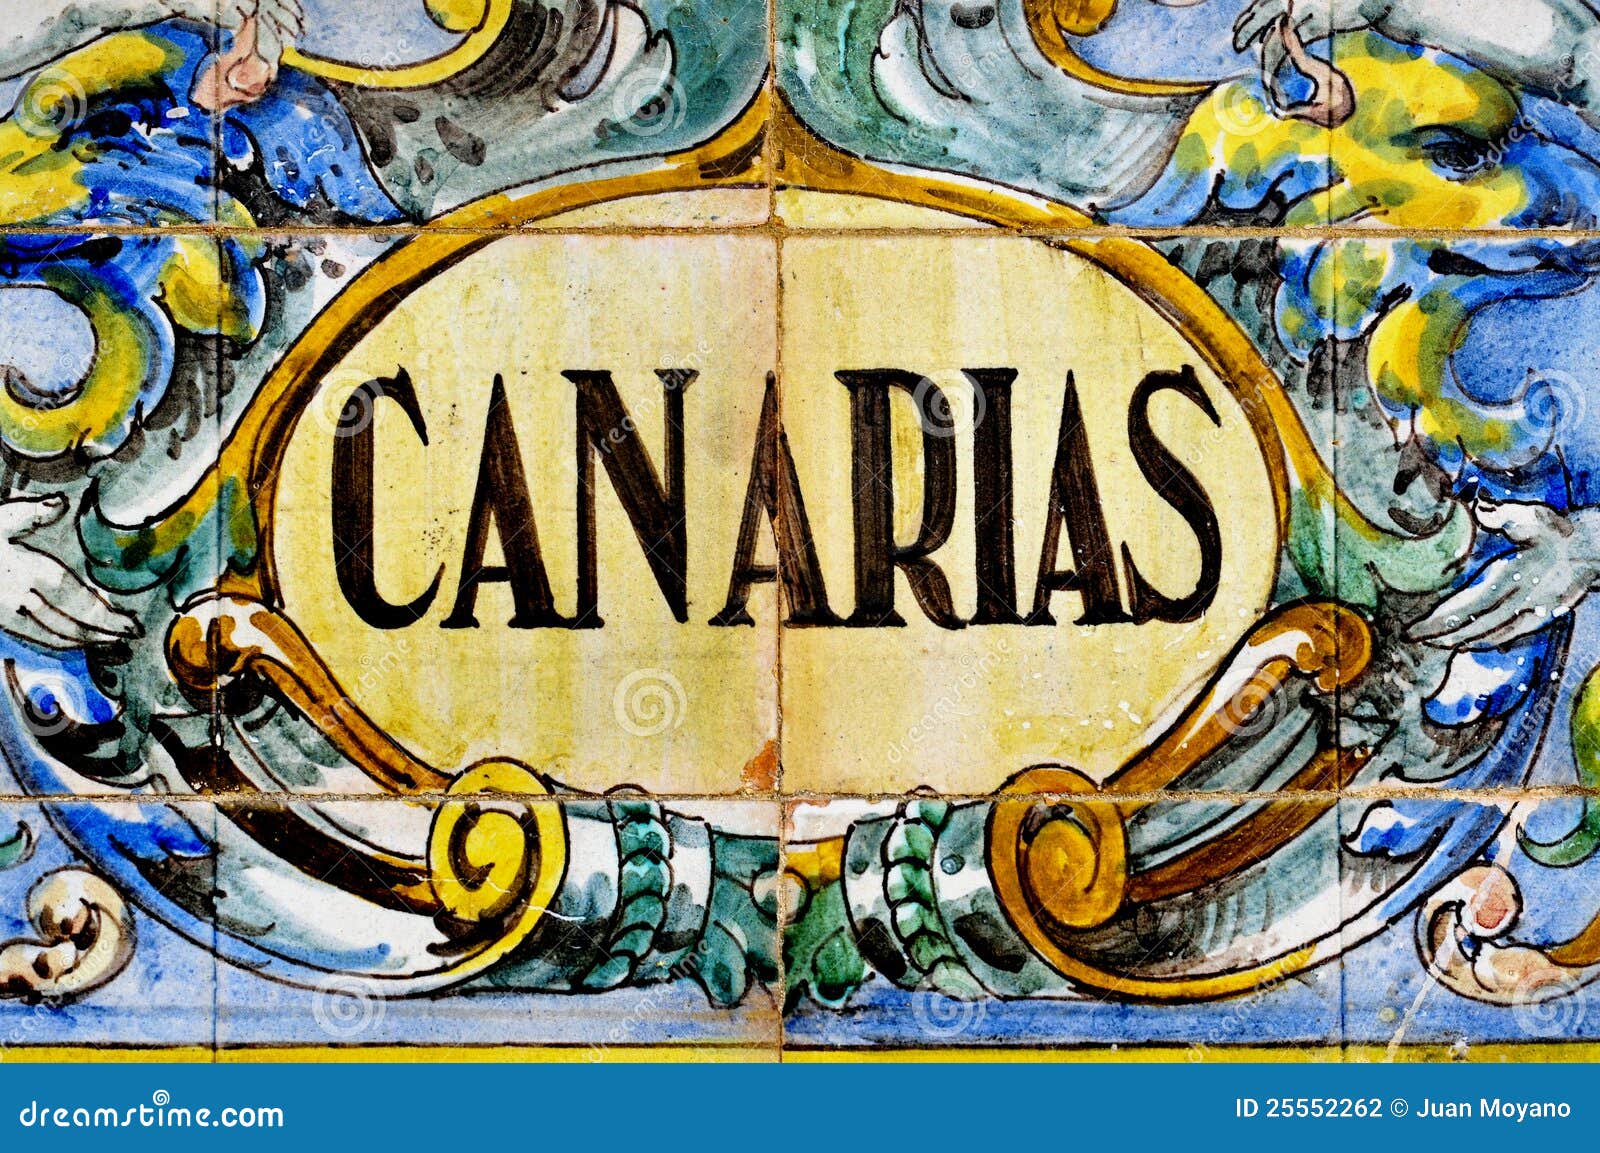 canarias, canary islands, spain